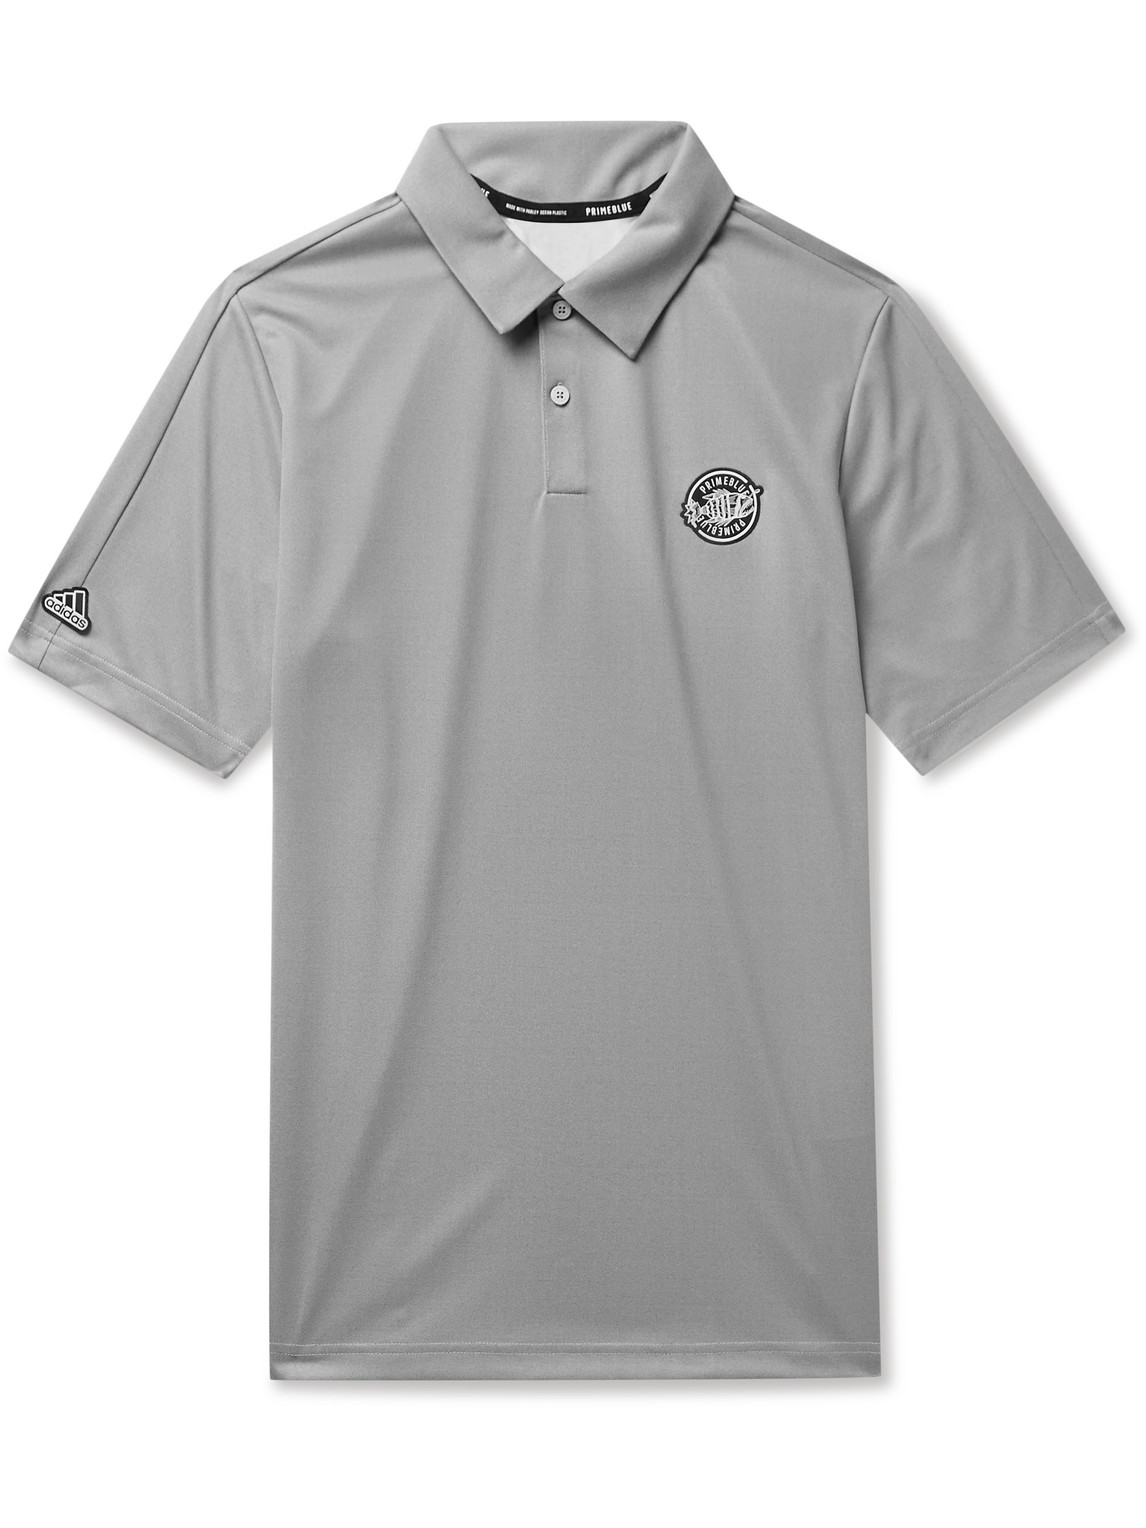 Adidas Golf Appliquéd Recycled Primeblue Piqué Golf Polo Shirt In Gray